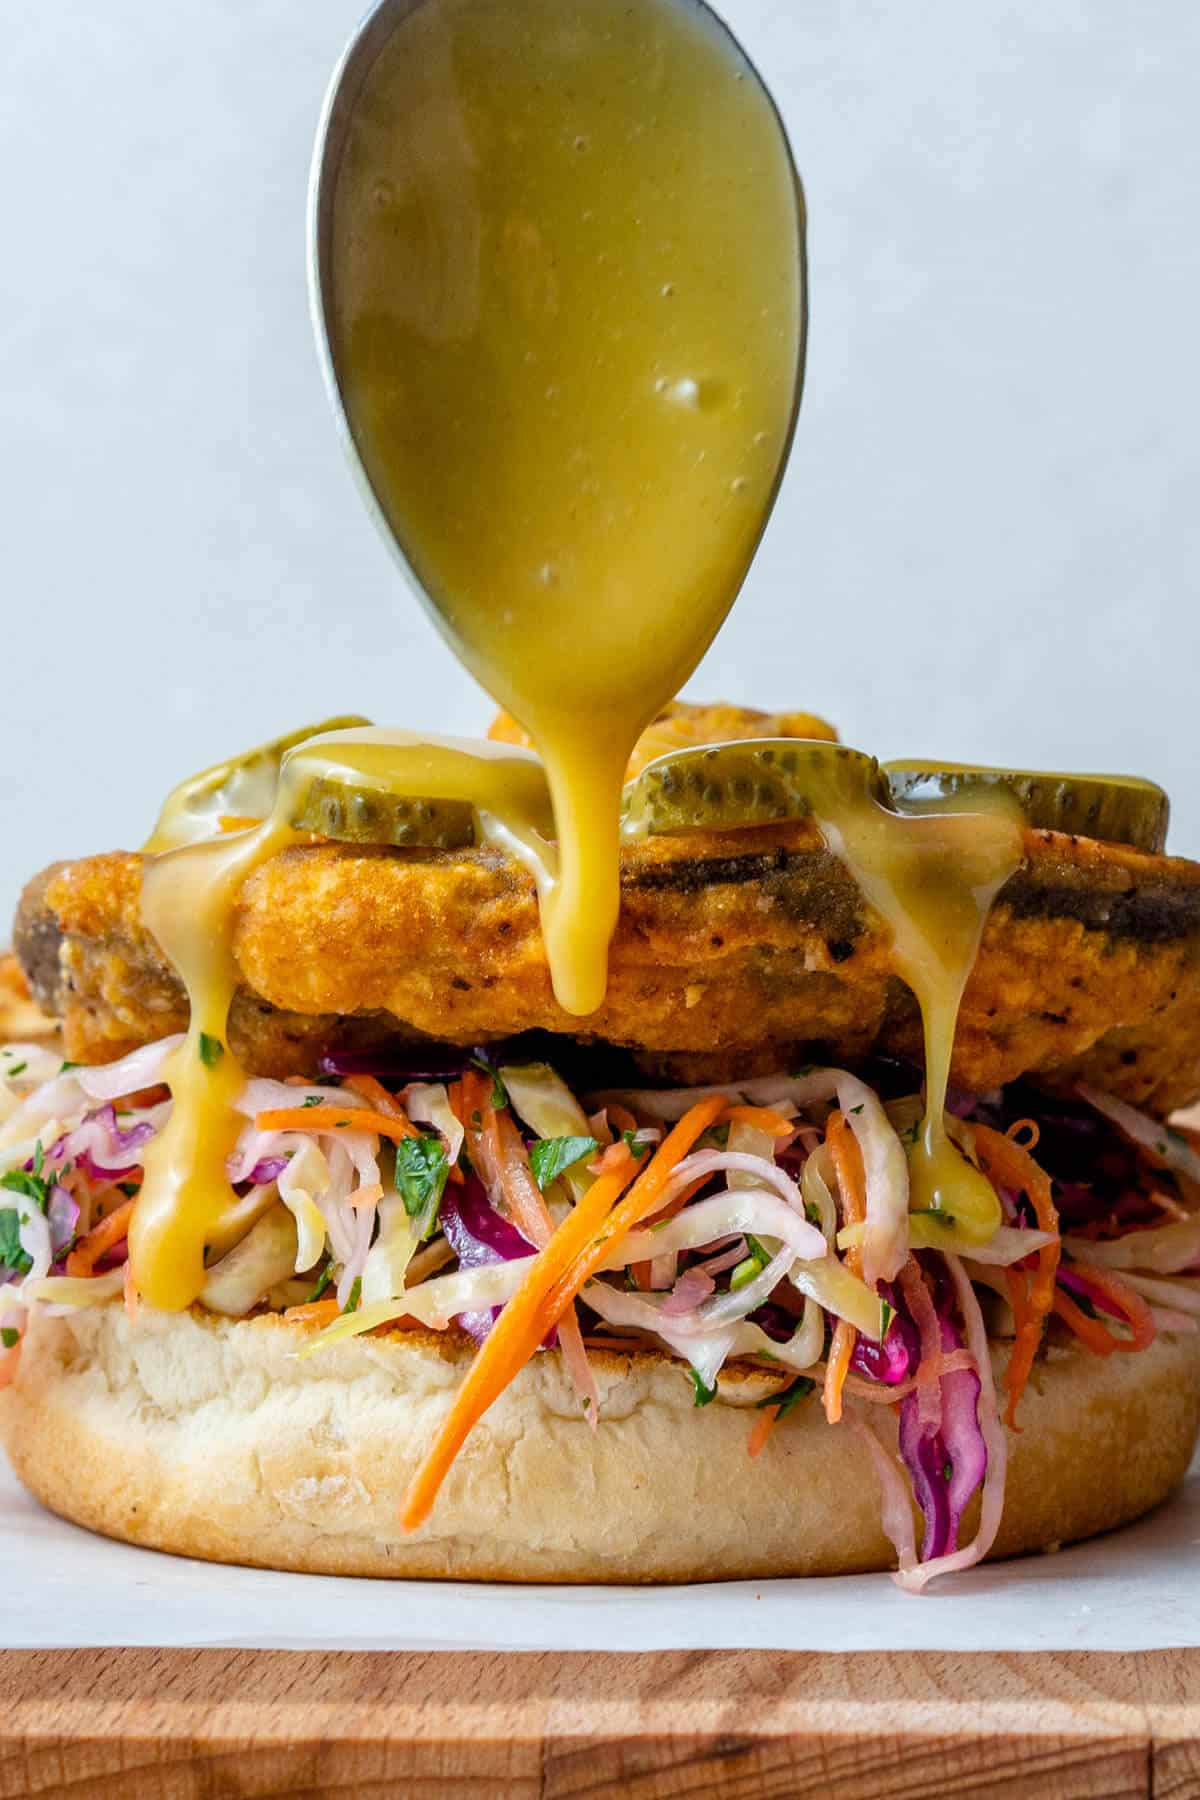 Honey mustard dressing being drizzled on top of vegan chicken sandwich